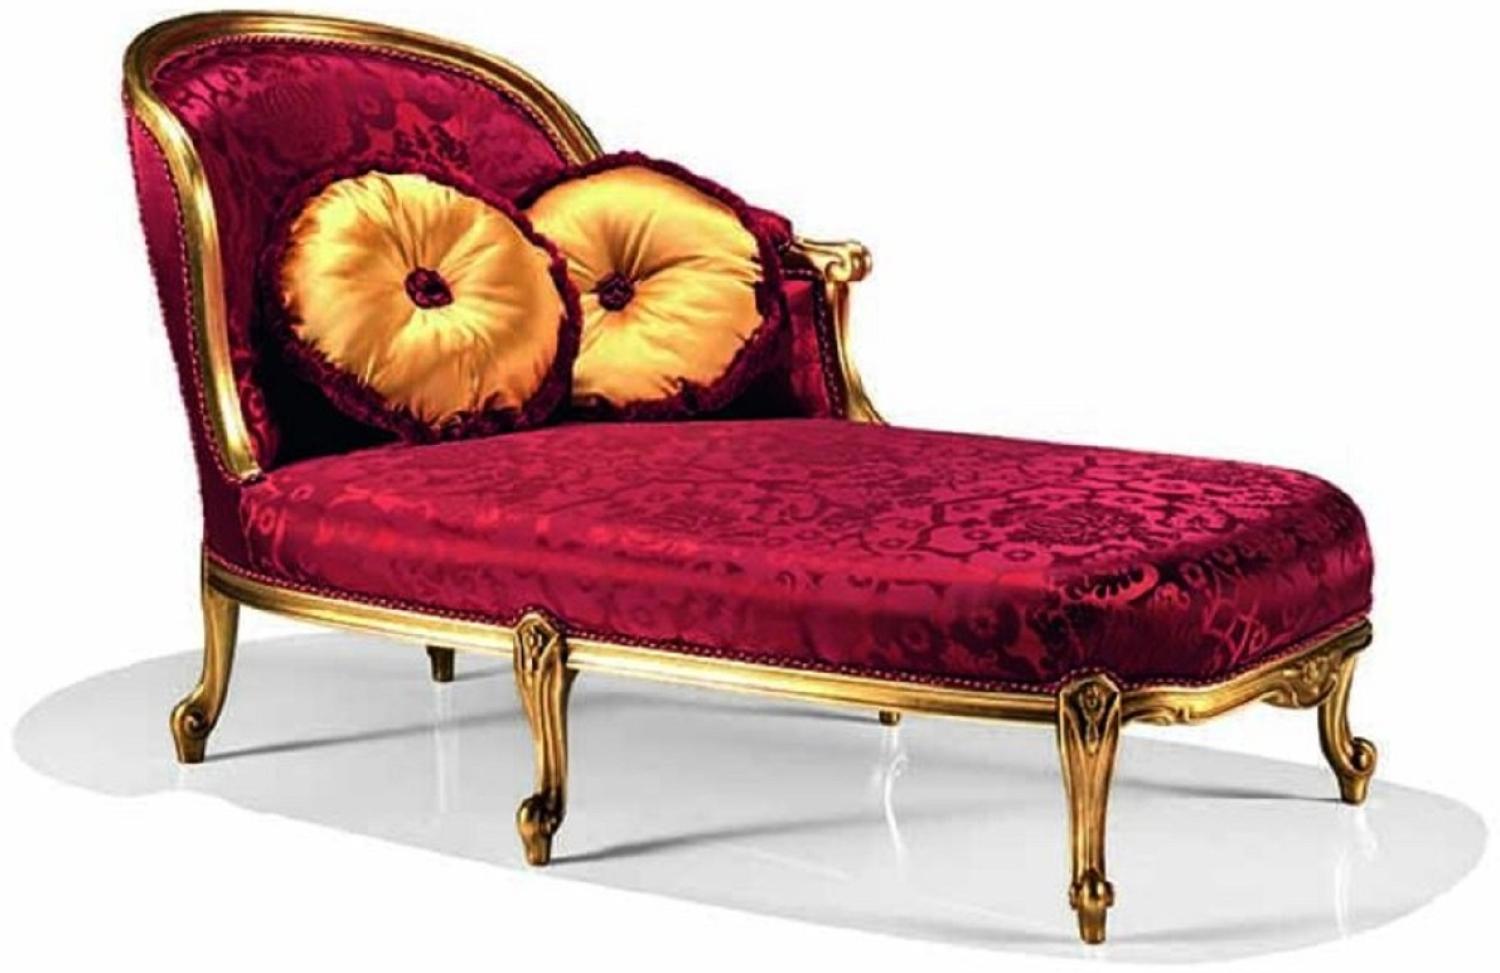 Casa Padrino Luxus Barock Chaiselongue Bordeauxrot / Gold 160 cm - Made in Italy Bild 1